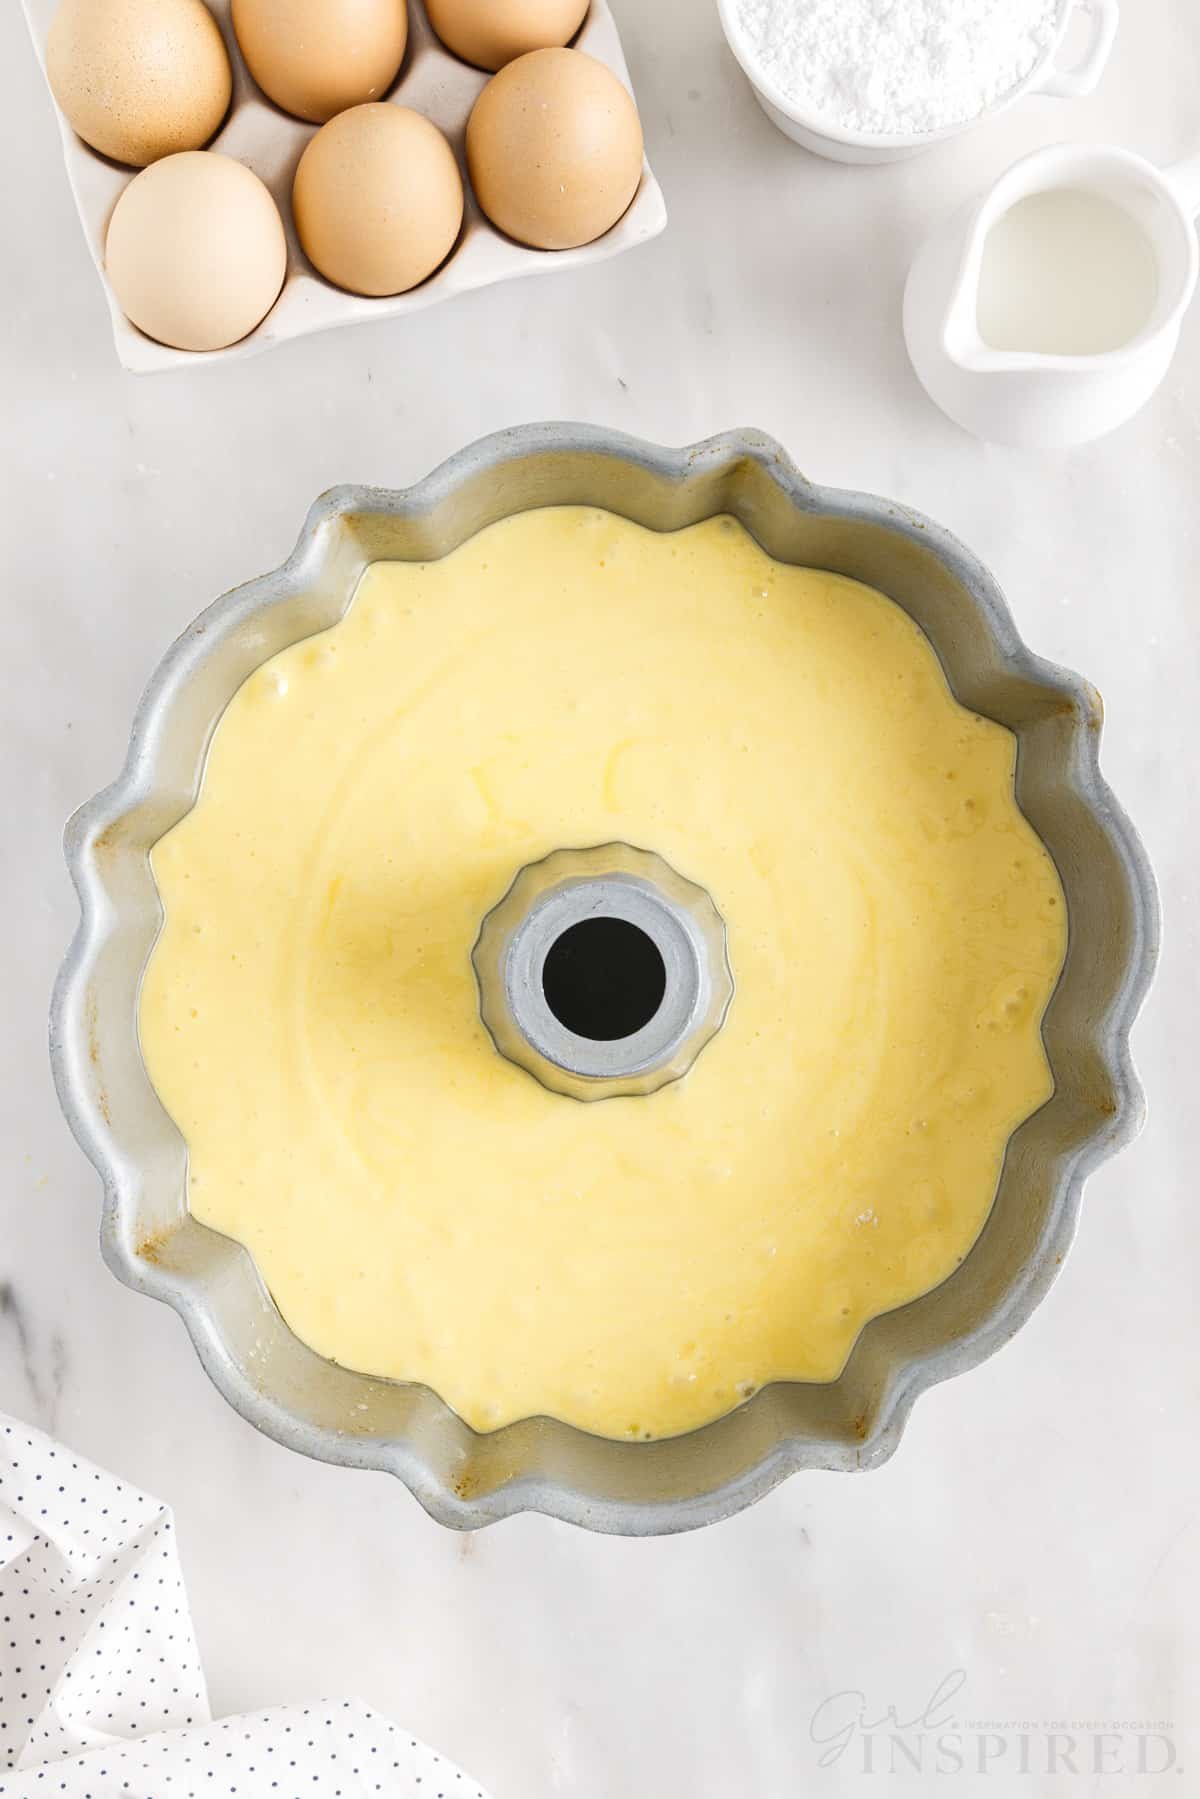 Duncan Hines Lemon Cake Mix Recipe batter in a bundt pan next to eggs.